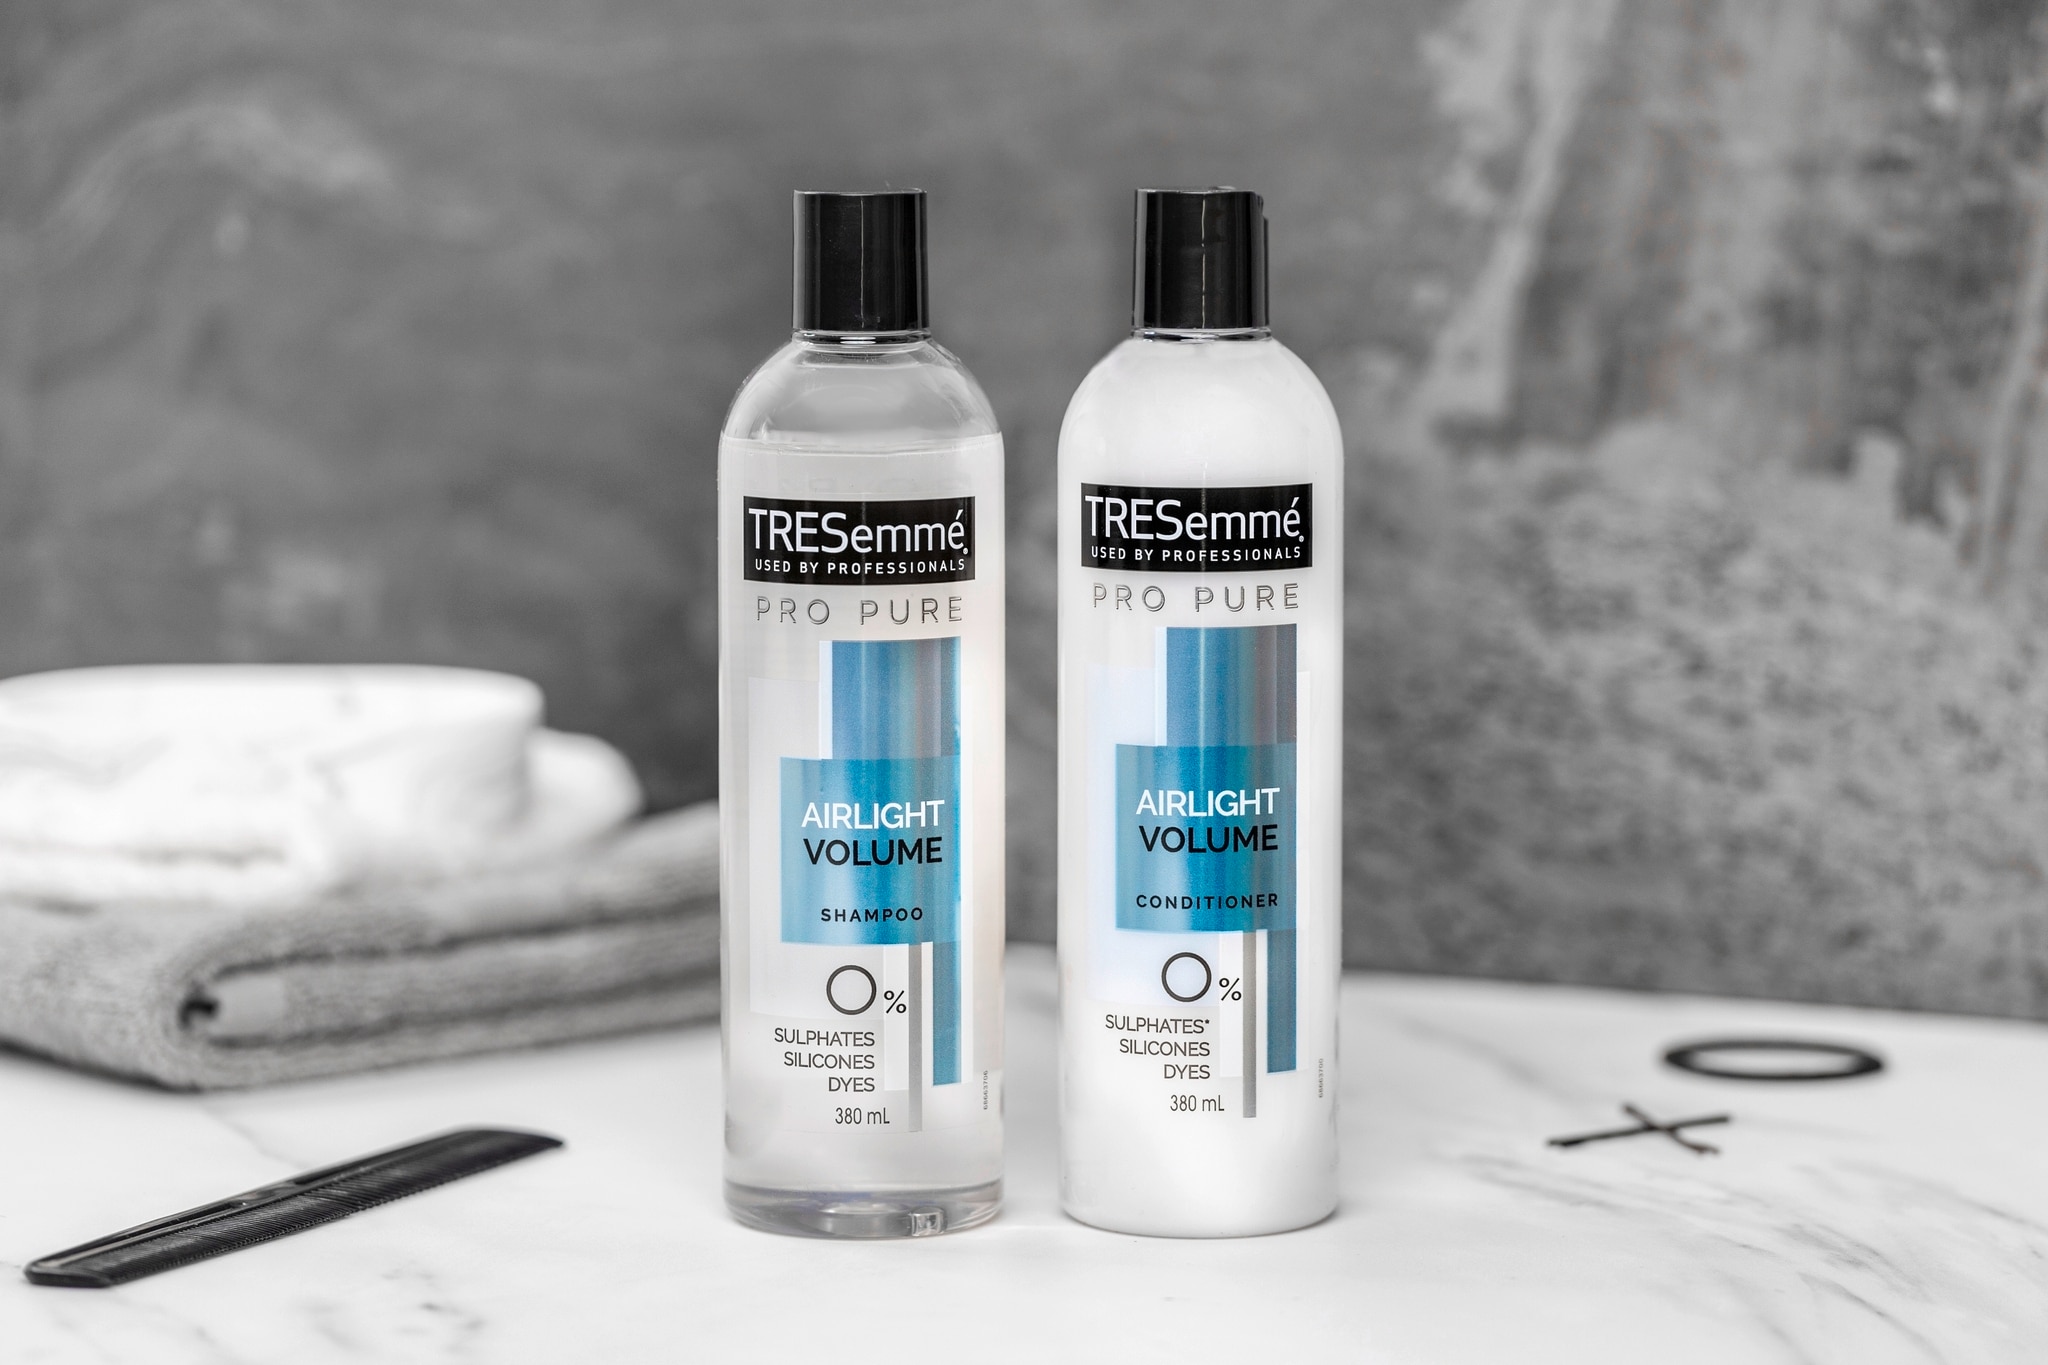 Airlight volume shampoo and conditoner